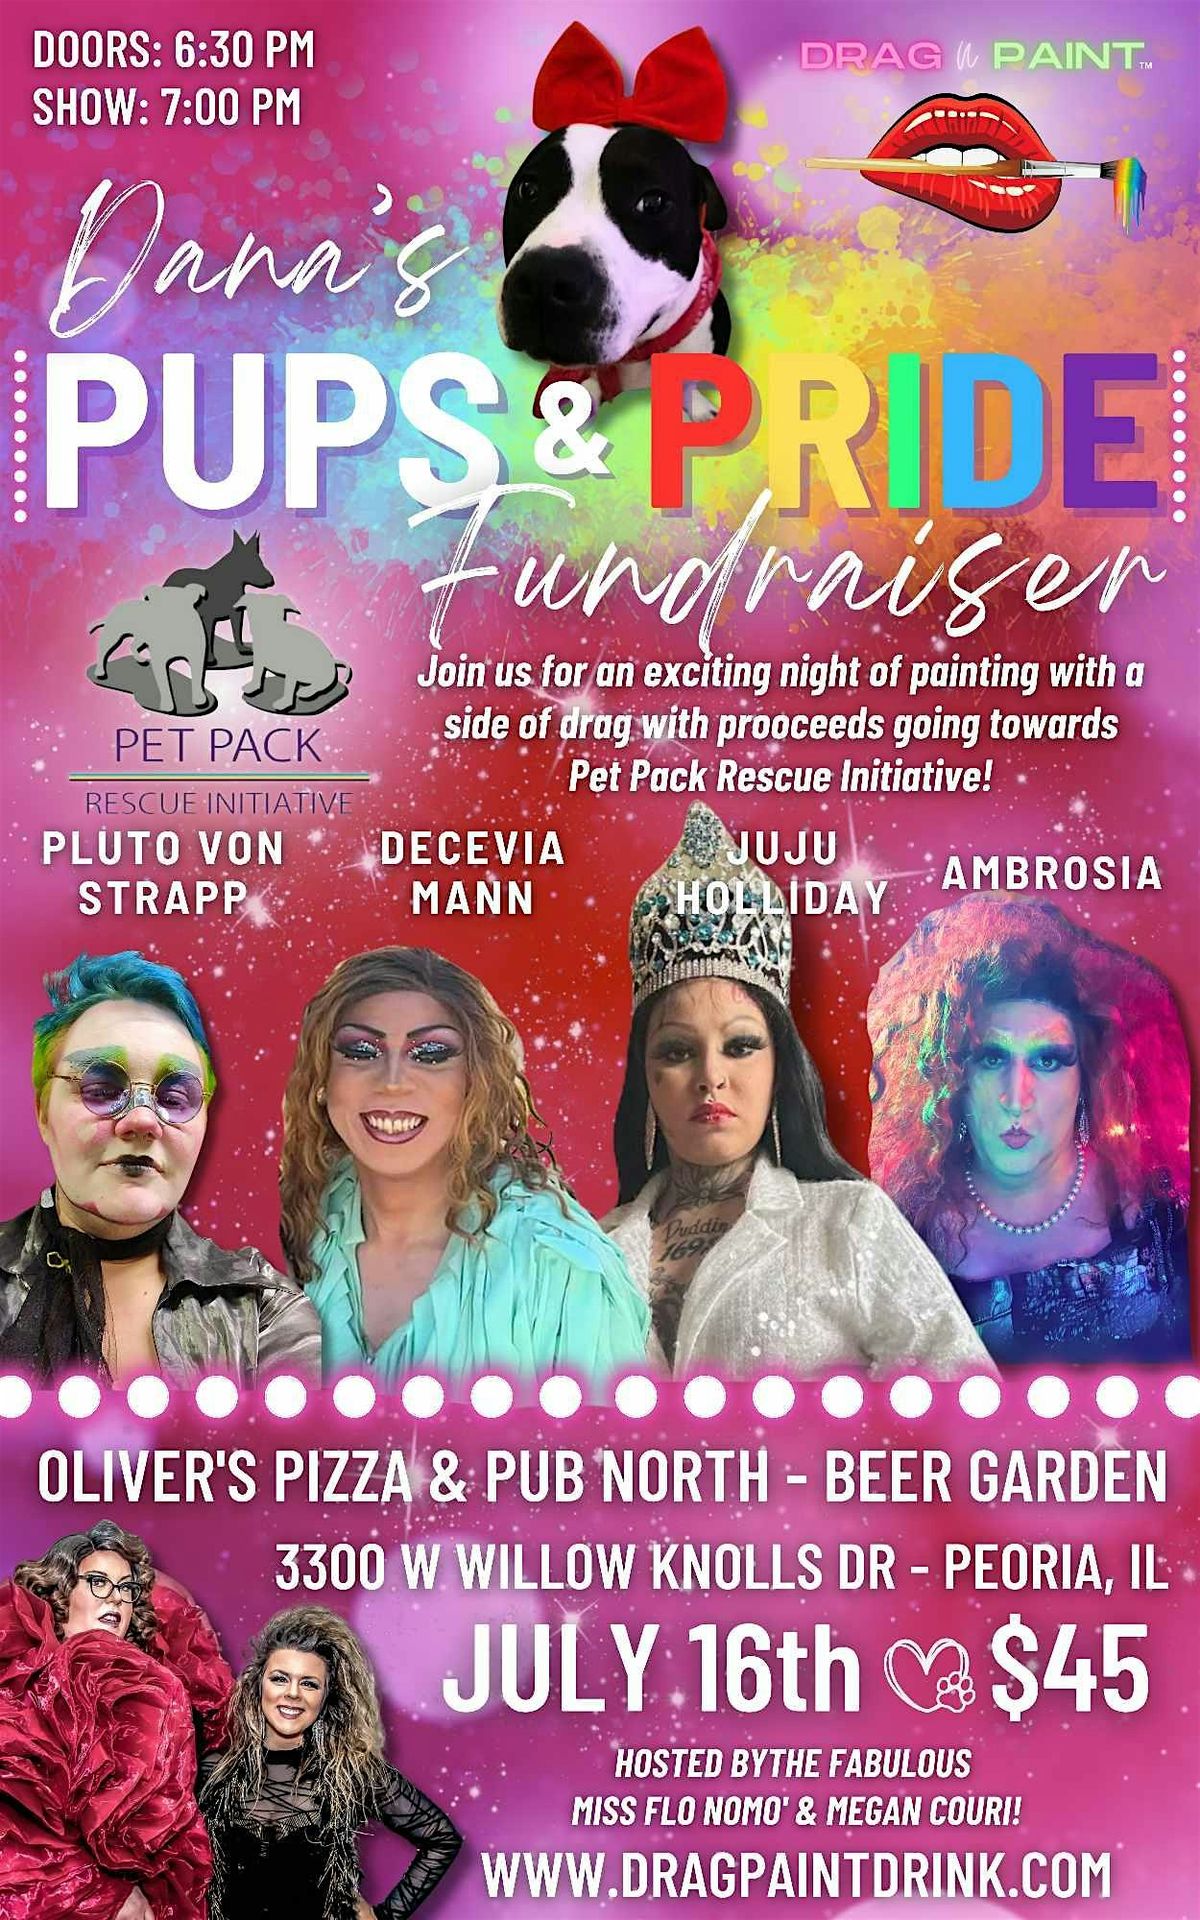 Drag N' Paint- Dana's Pups & Pride Fundraiser